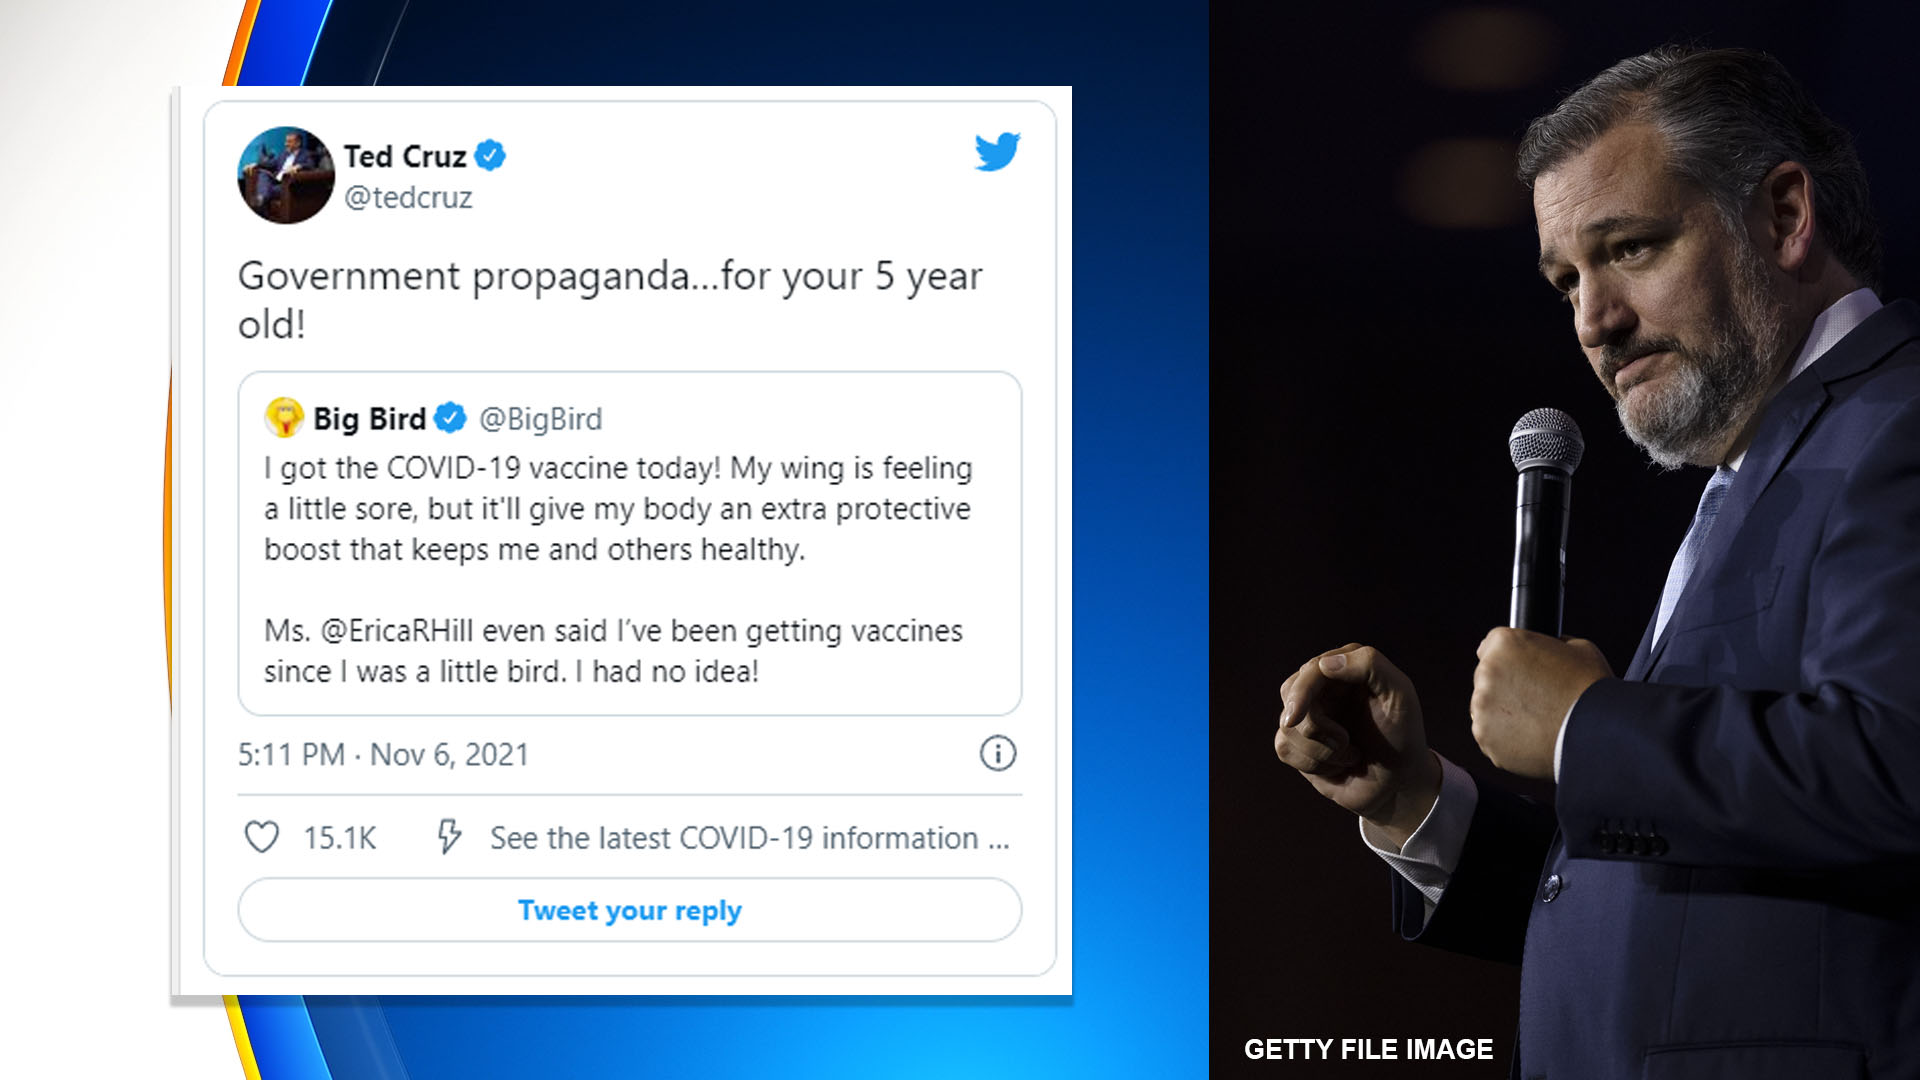 Ted Cruz Blasts ‘Big Bird’ COVID Vaccine Tweet As ‘Government Propaganda’